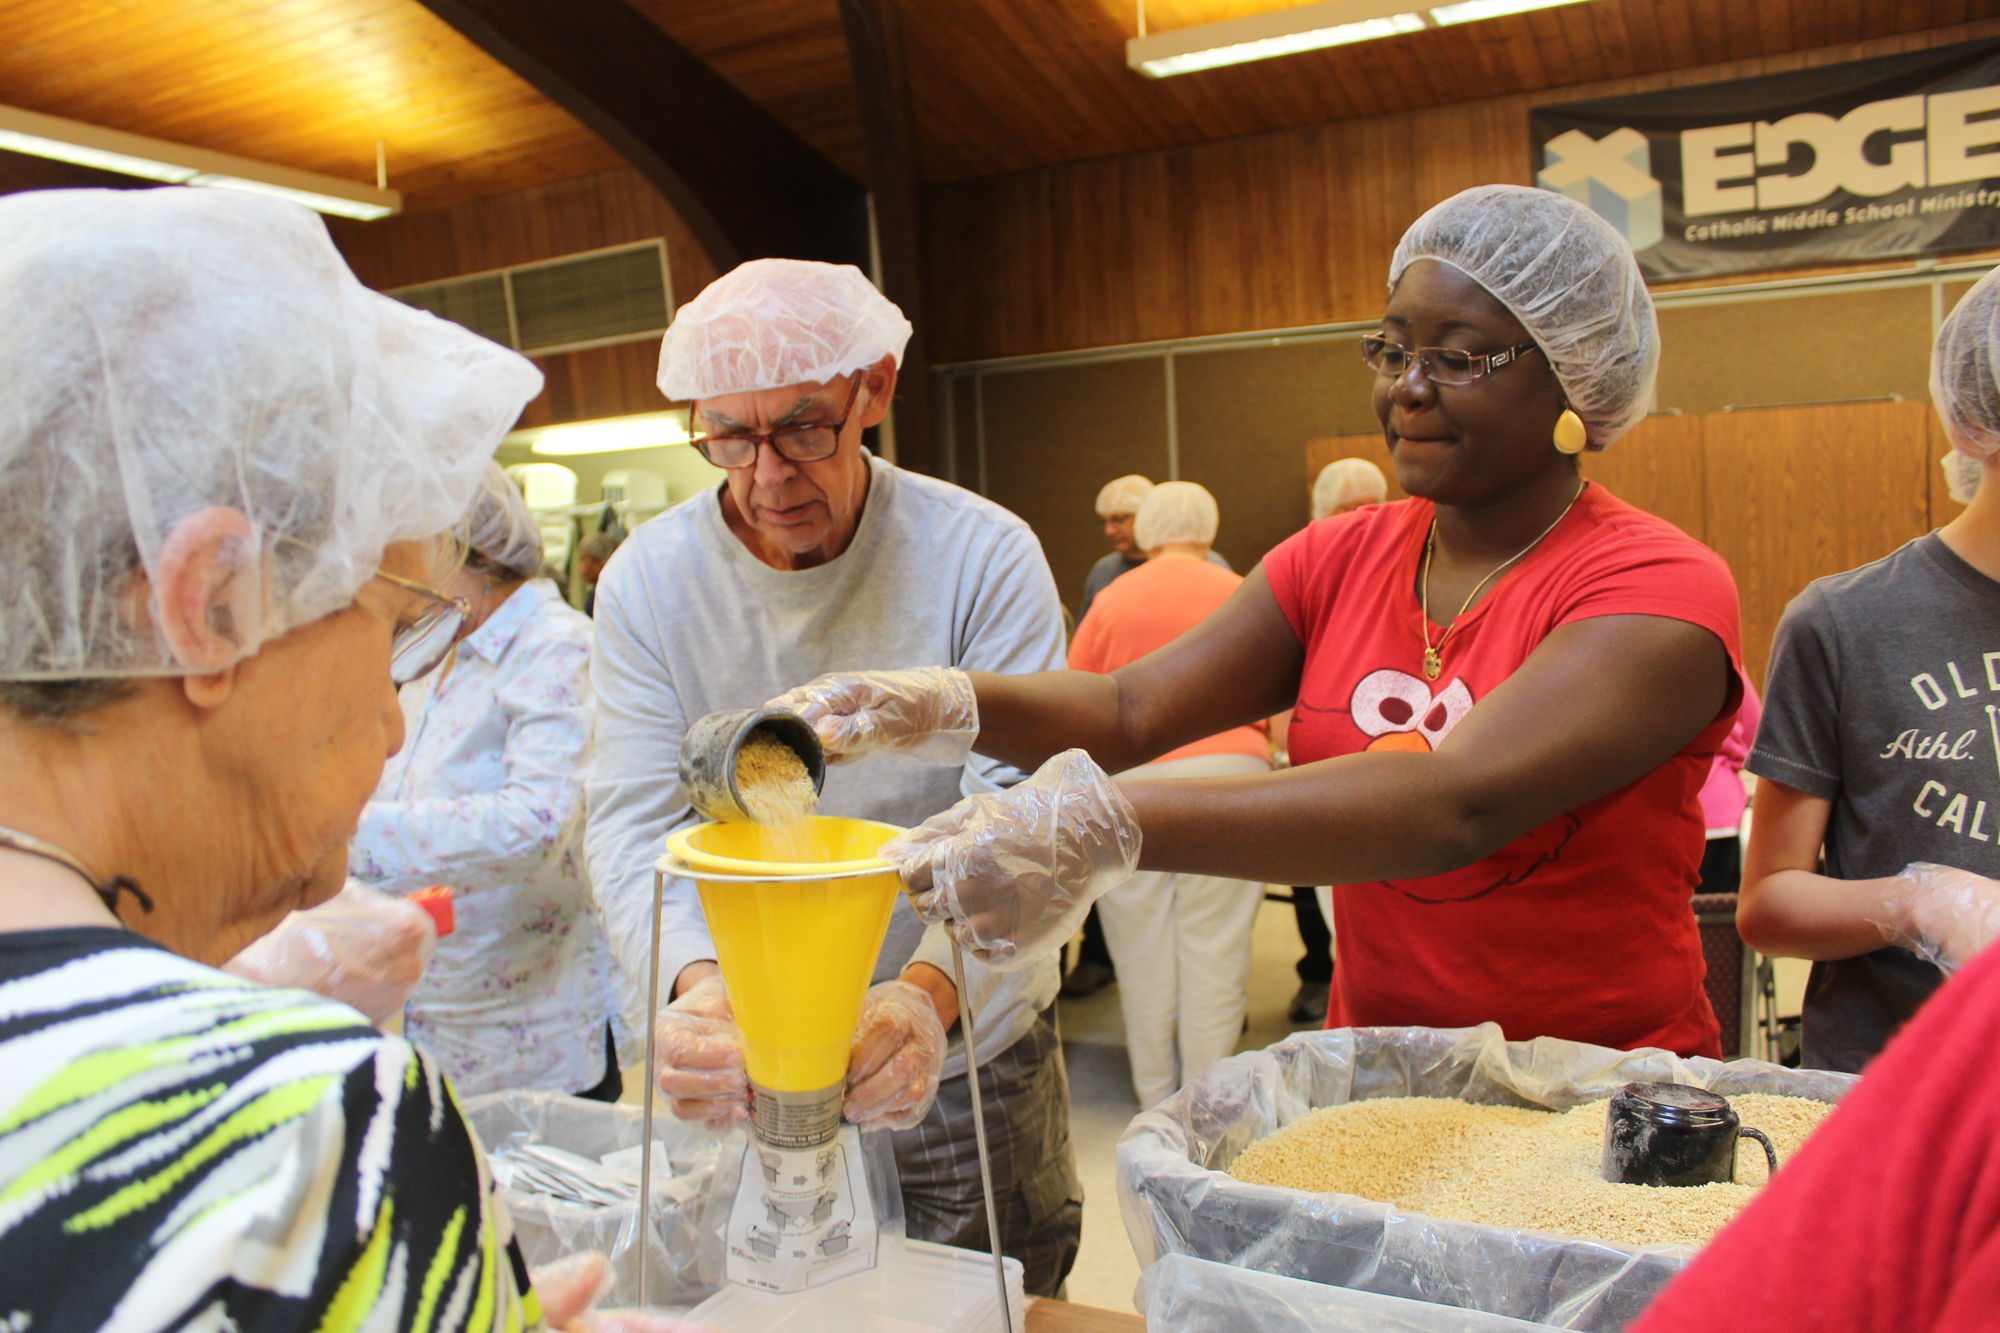 Tamara Licorish was among the 350 volunteers who helped package food (Photo by Emily Blackwood).